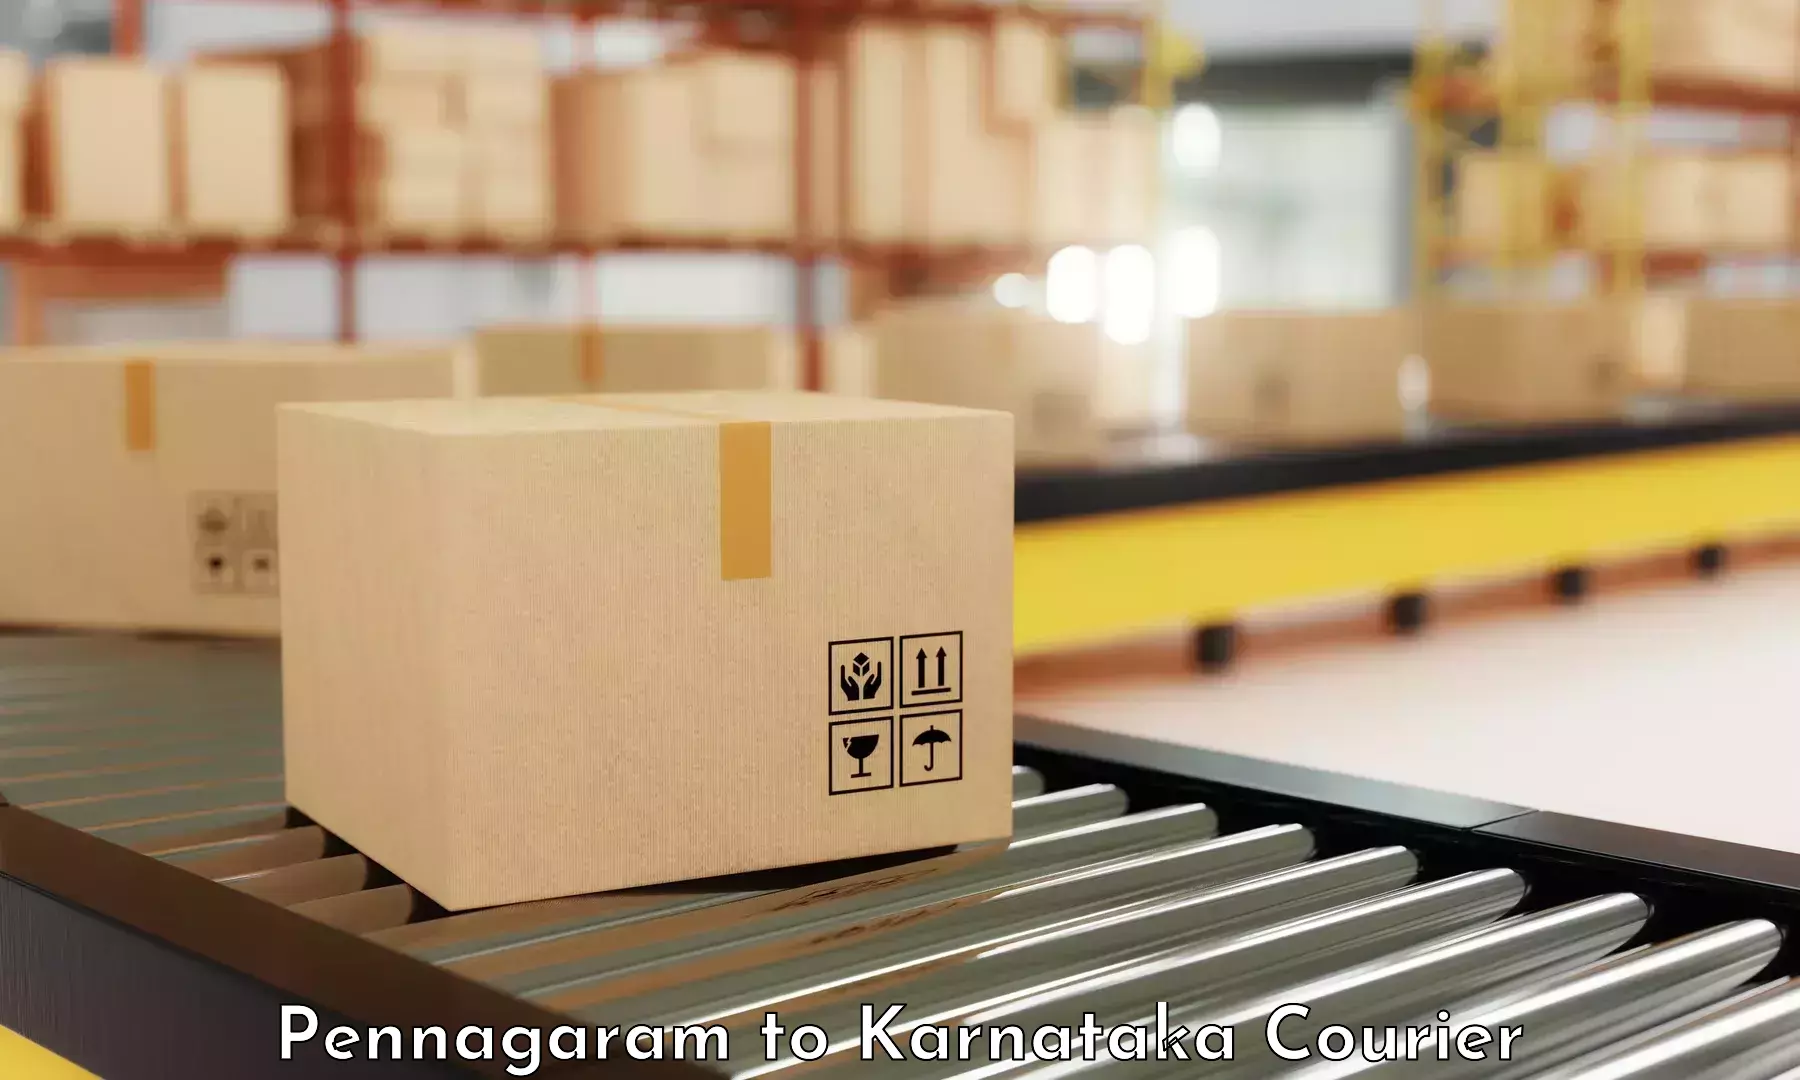 Same-day delivery solutions Pennagaram to Ramanagara